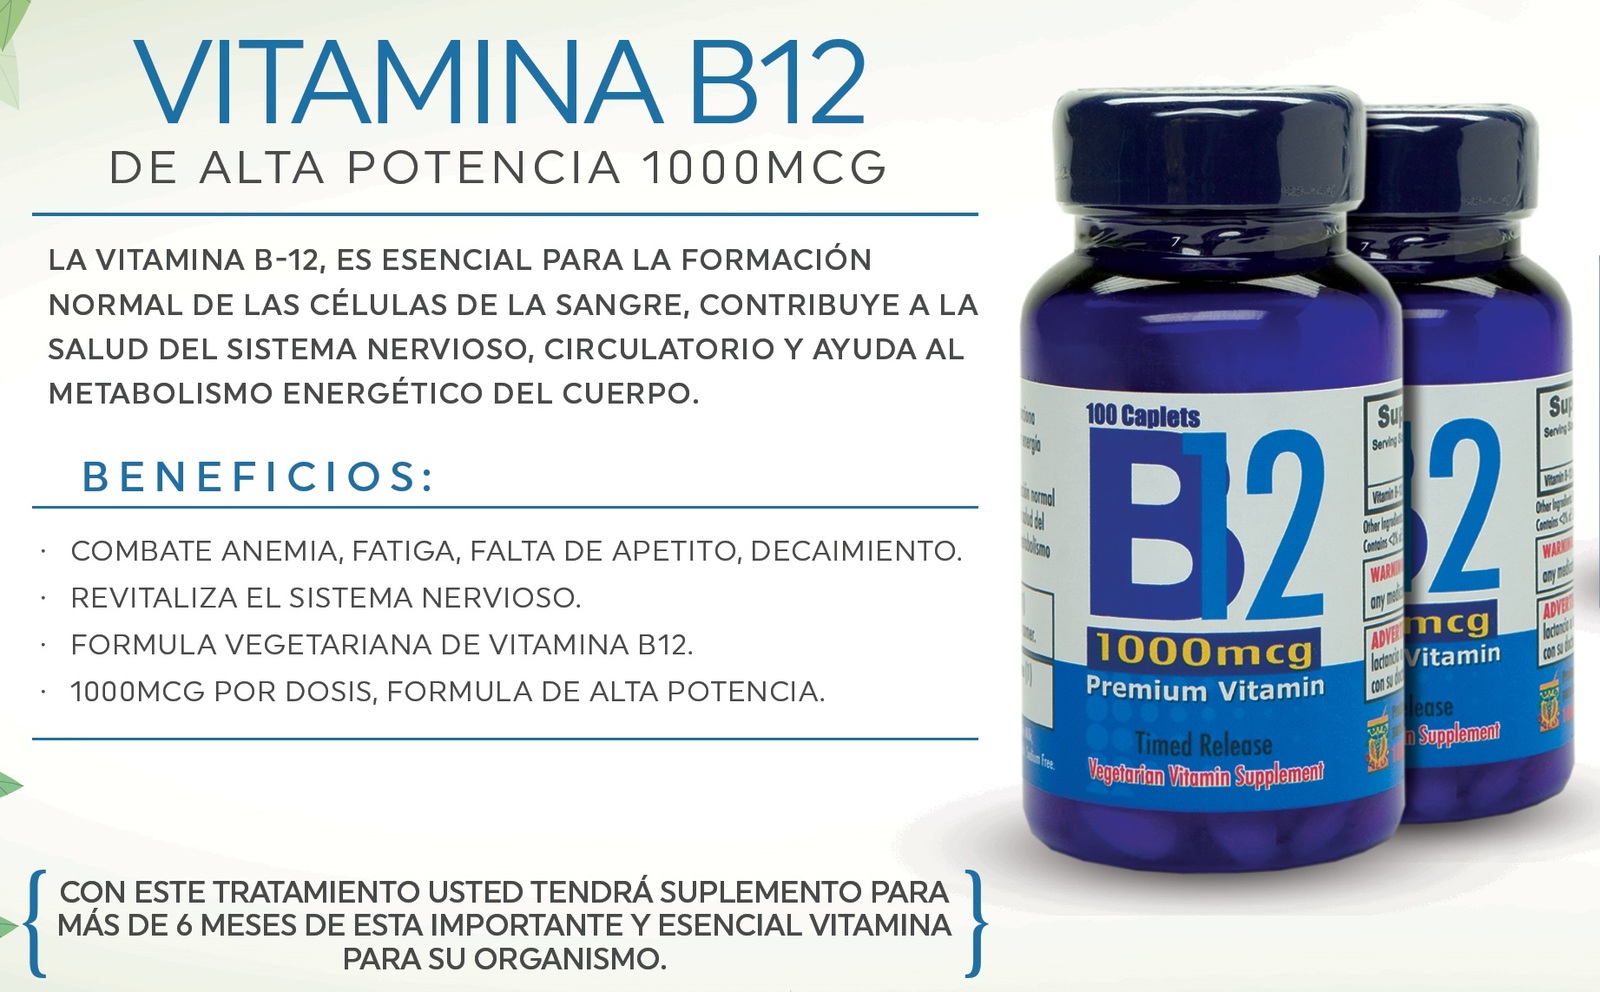 Donde encontrar la vitamina b12